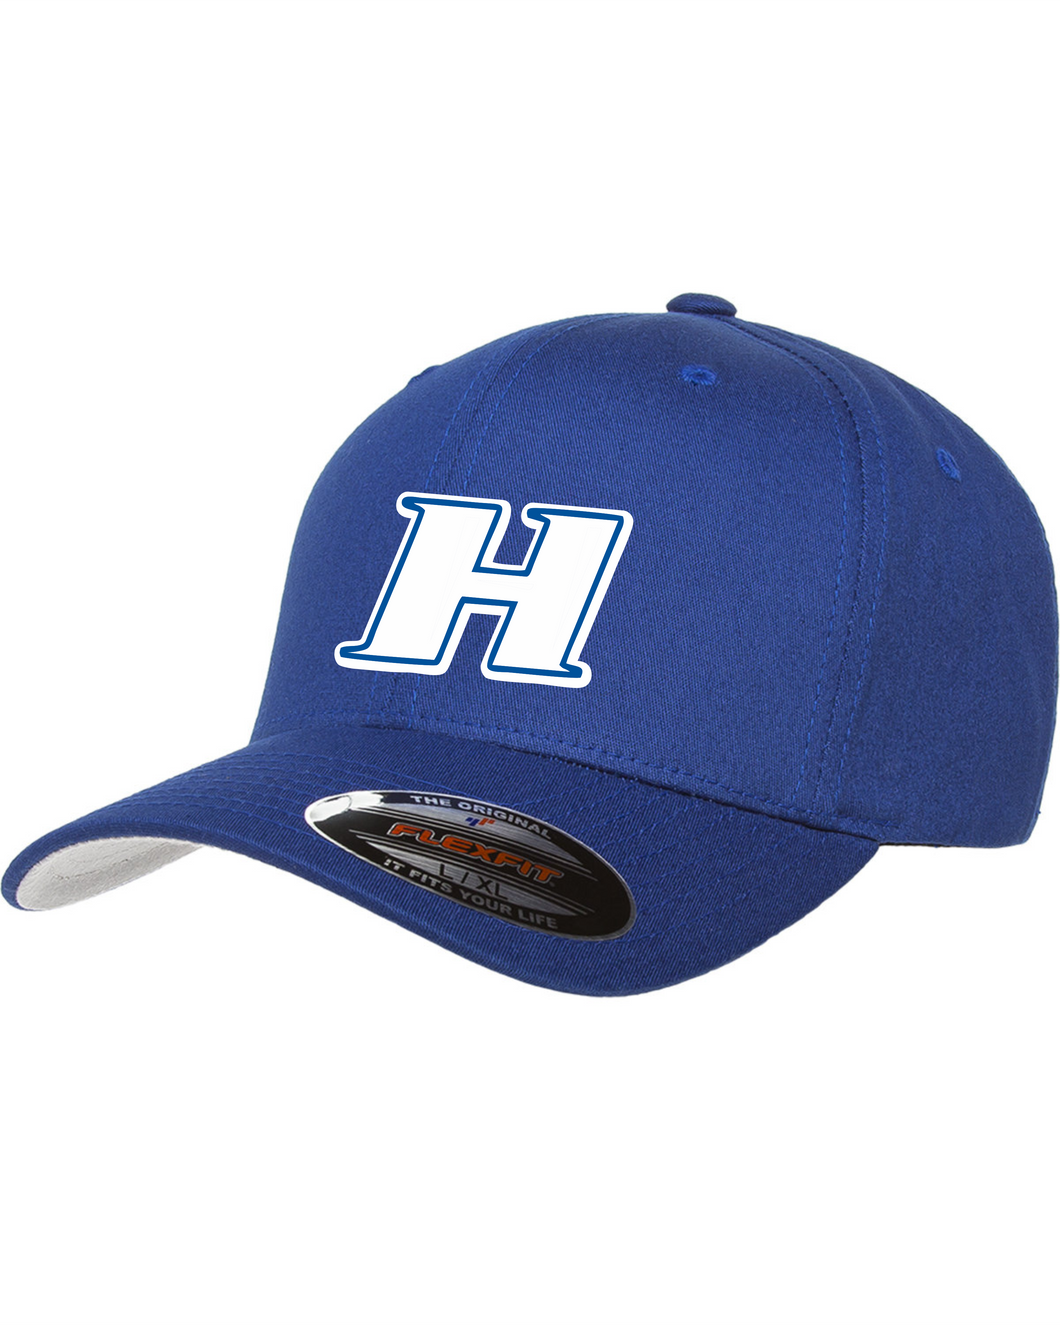 HG-AS-902-4 - Flexfit Adult Value Cotton Twill Cap - Hobgood H Logo